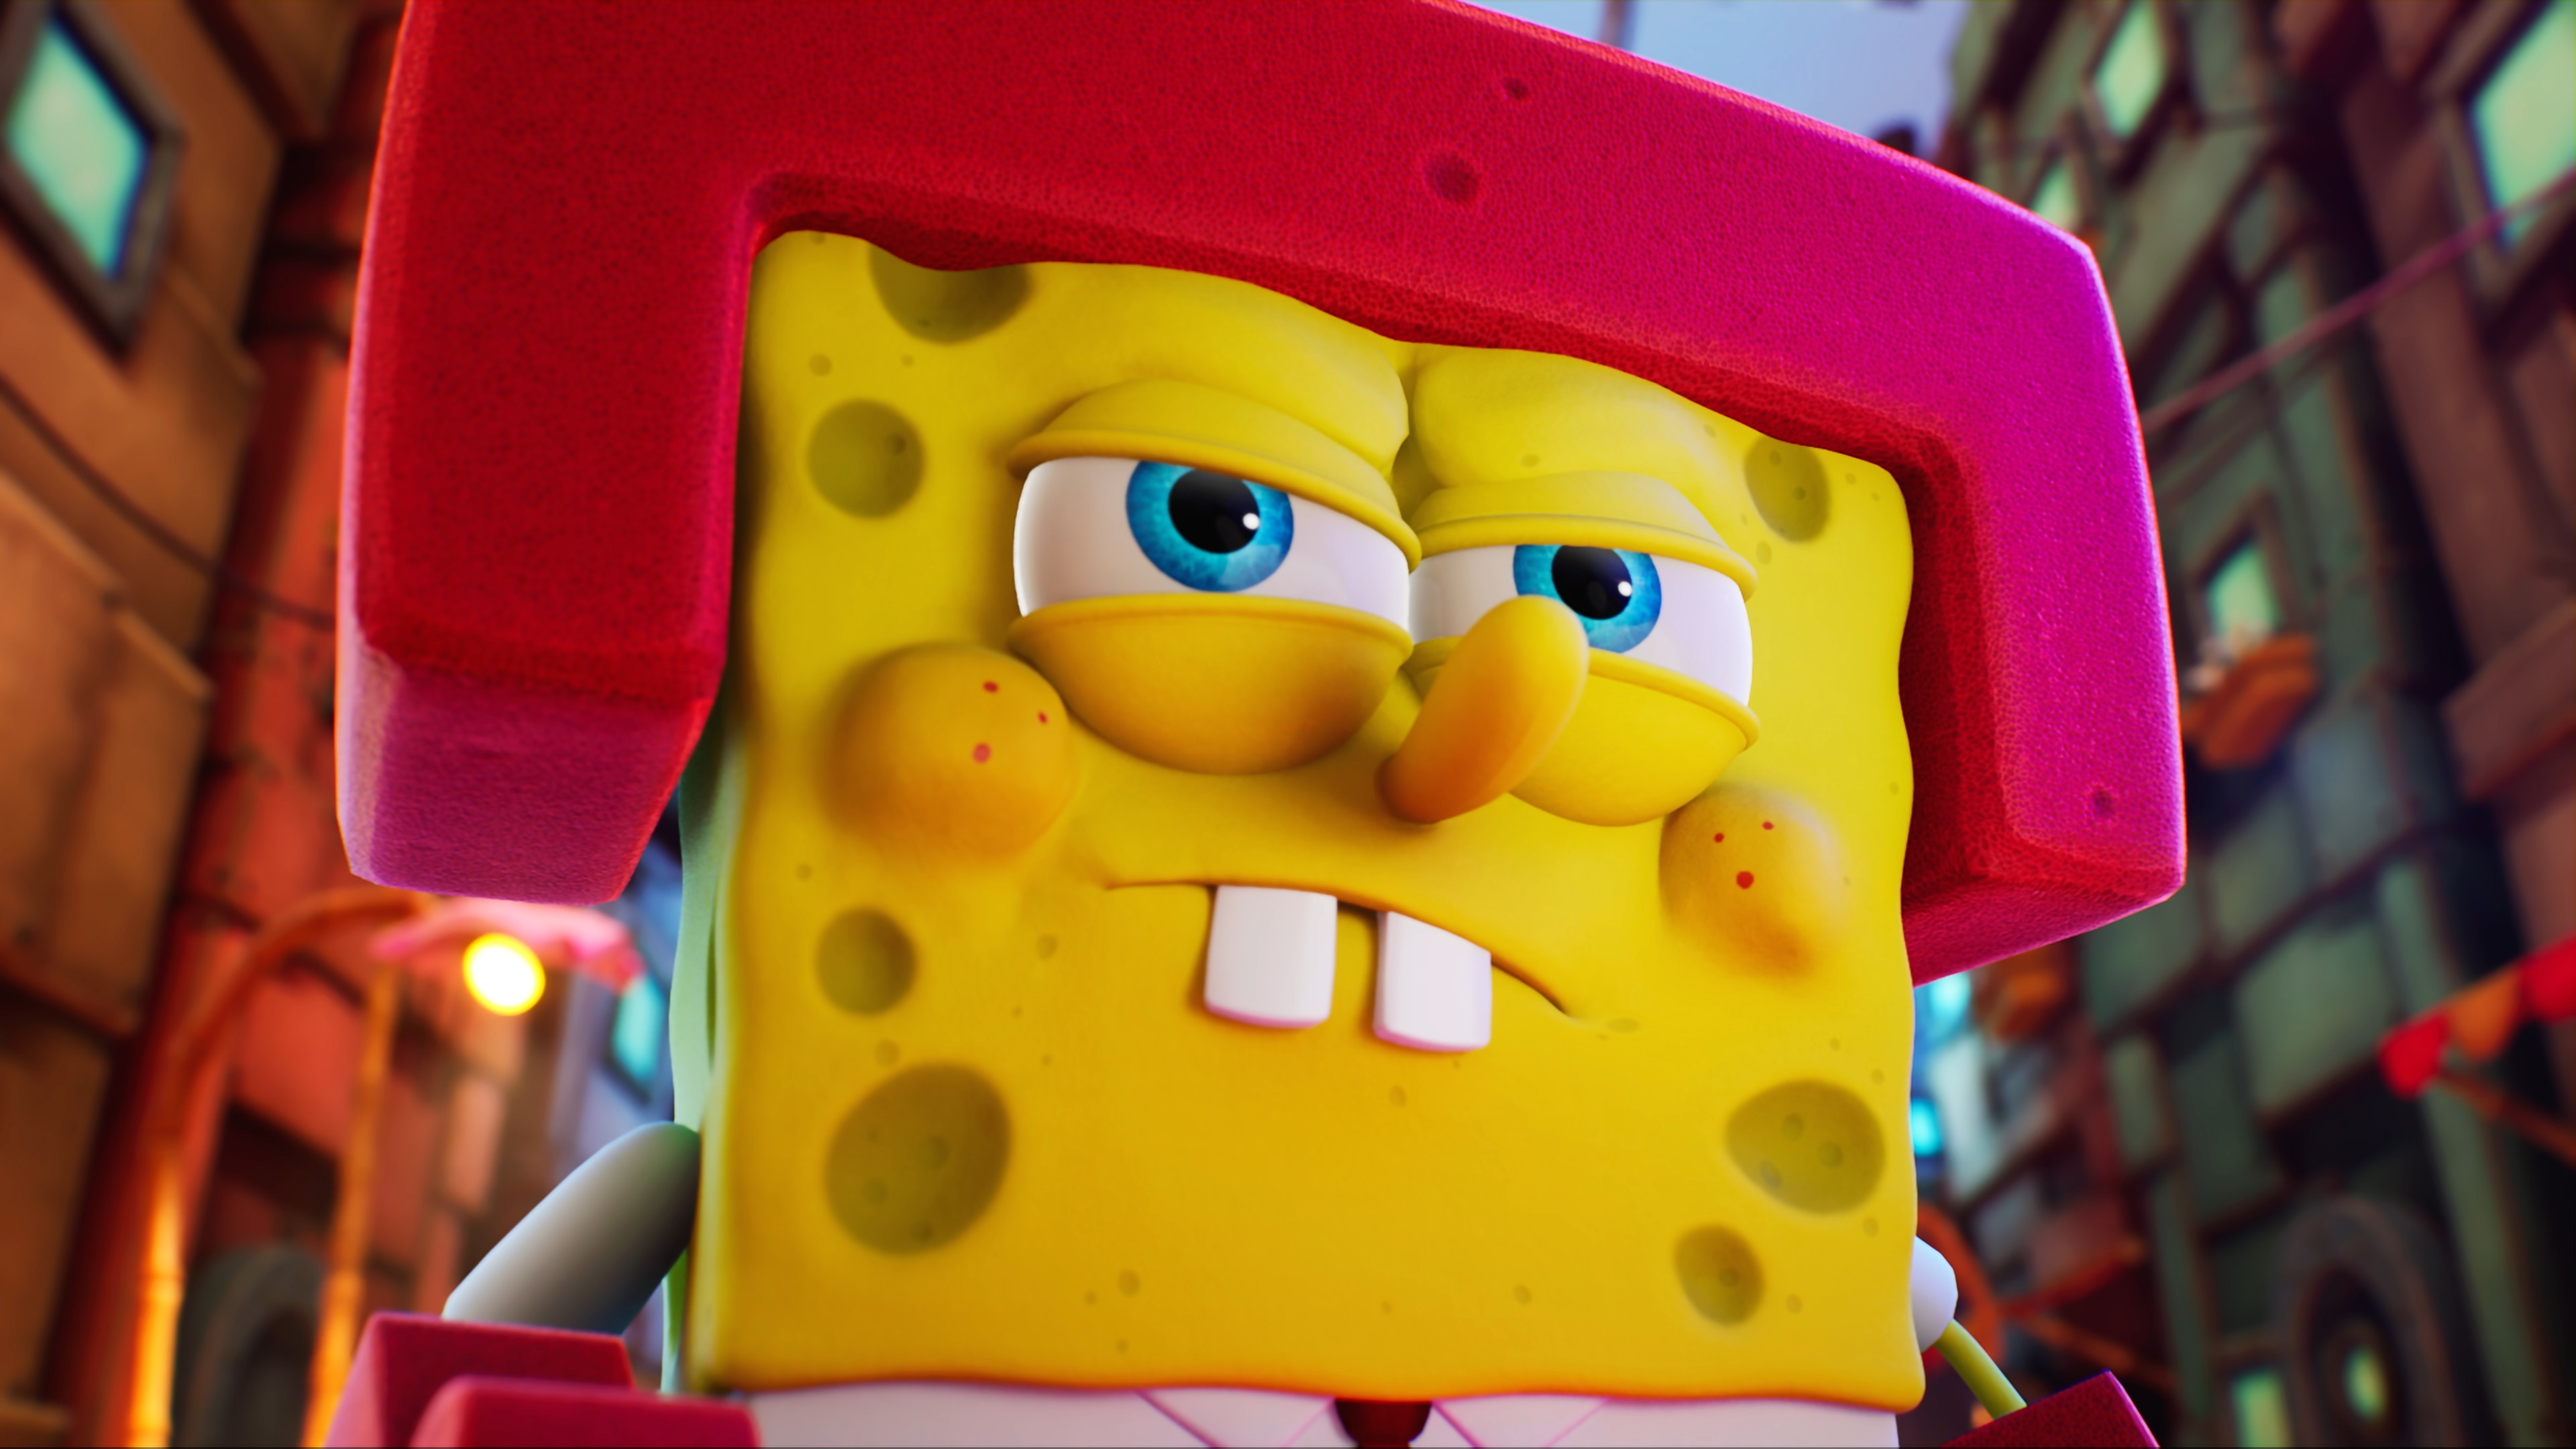 SpongeBob Squarepants Point and Click Games 